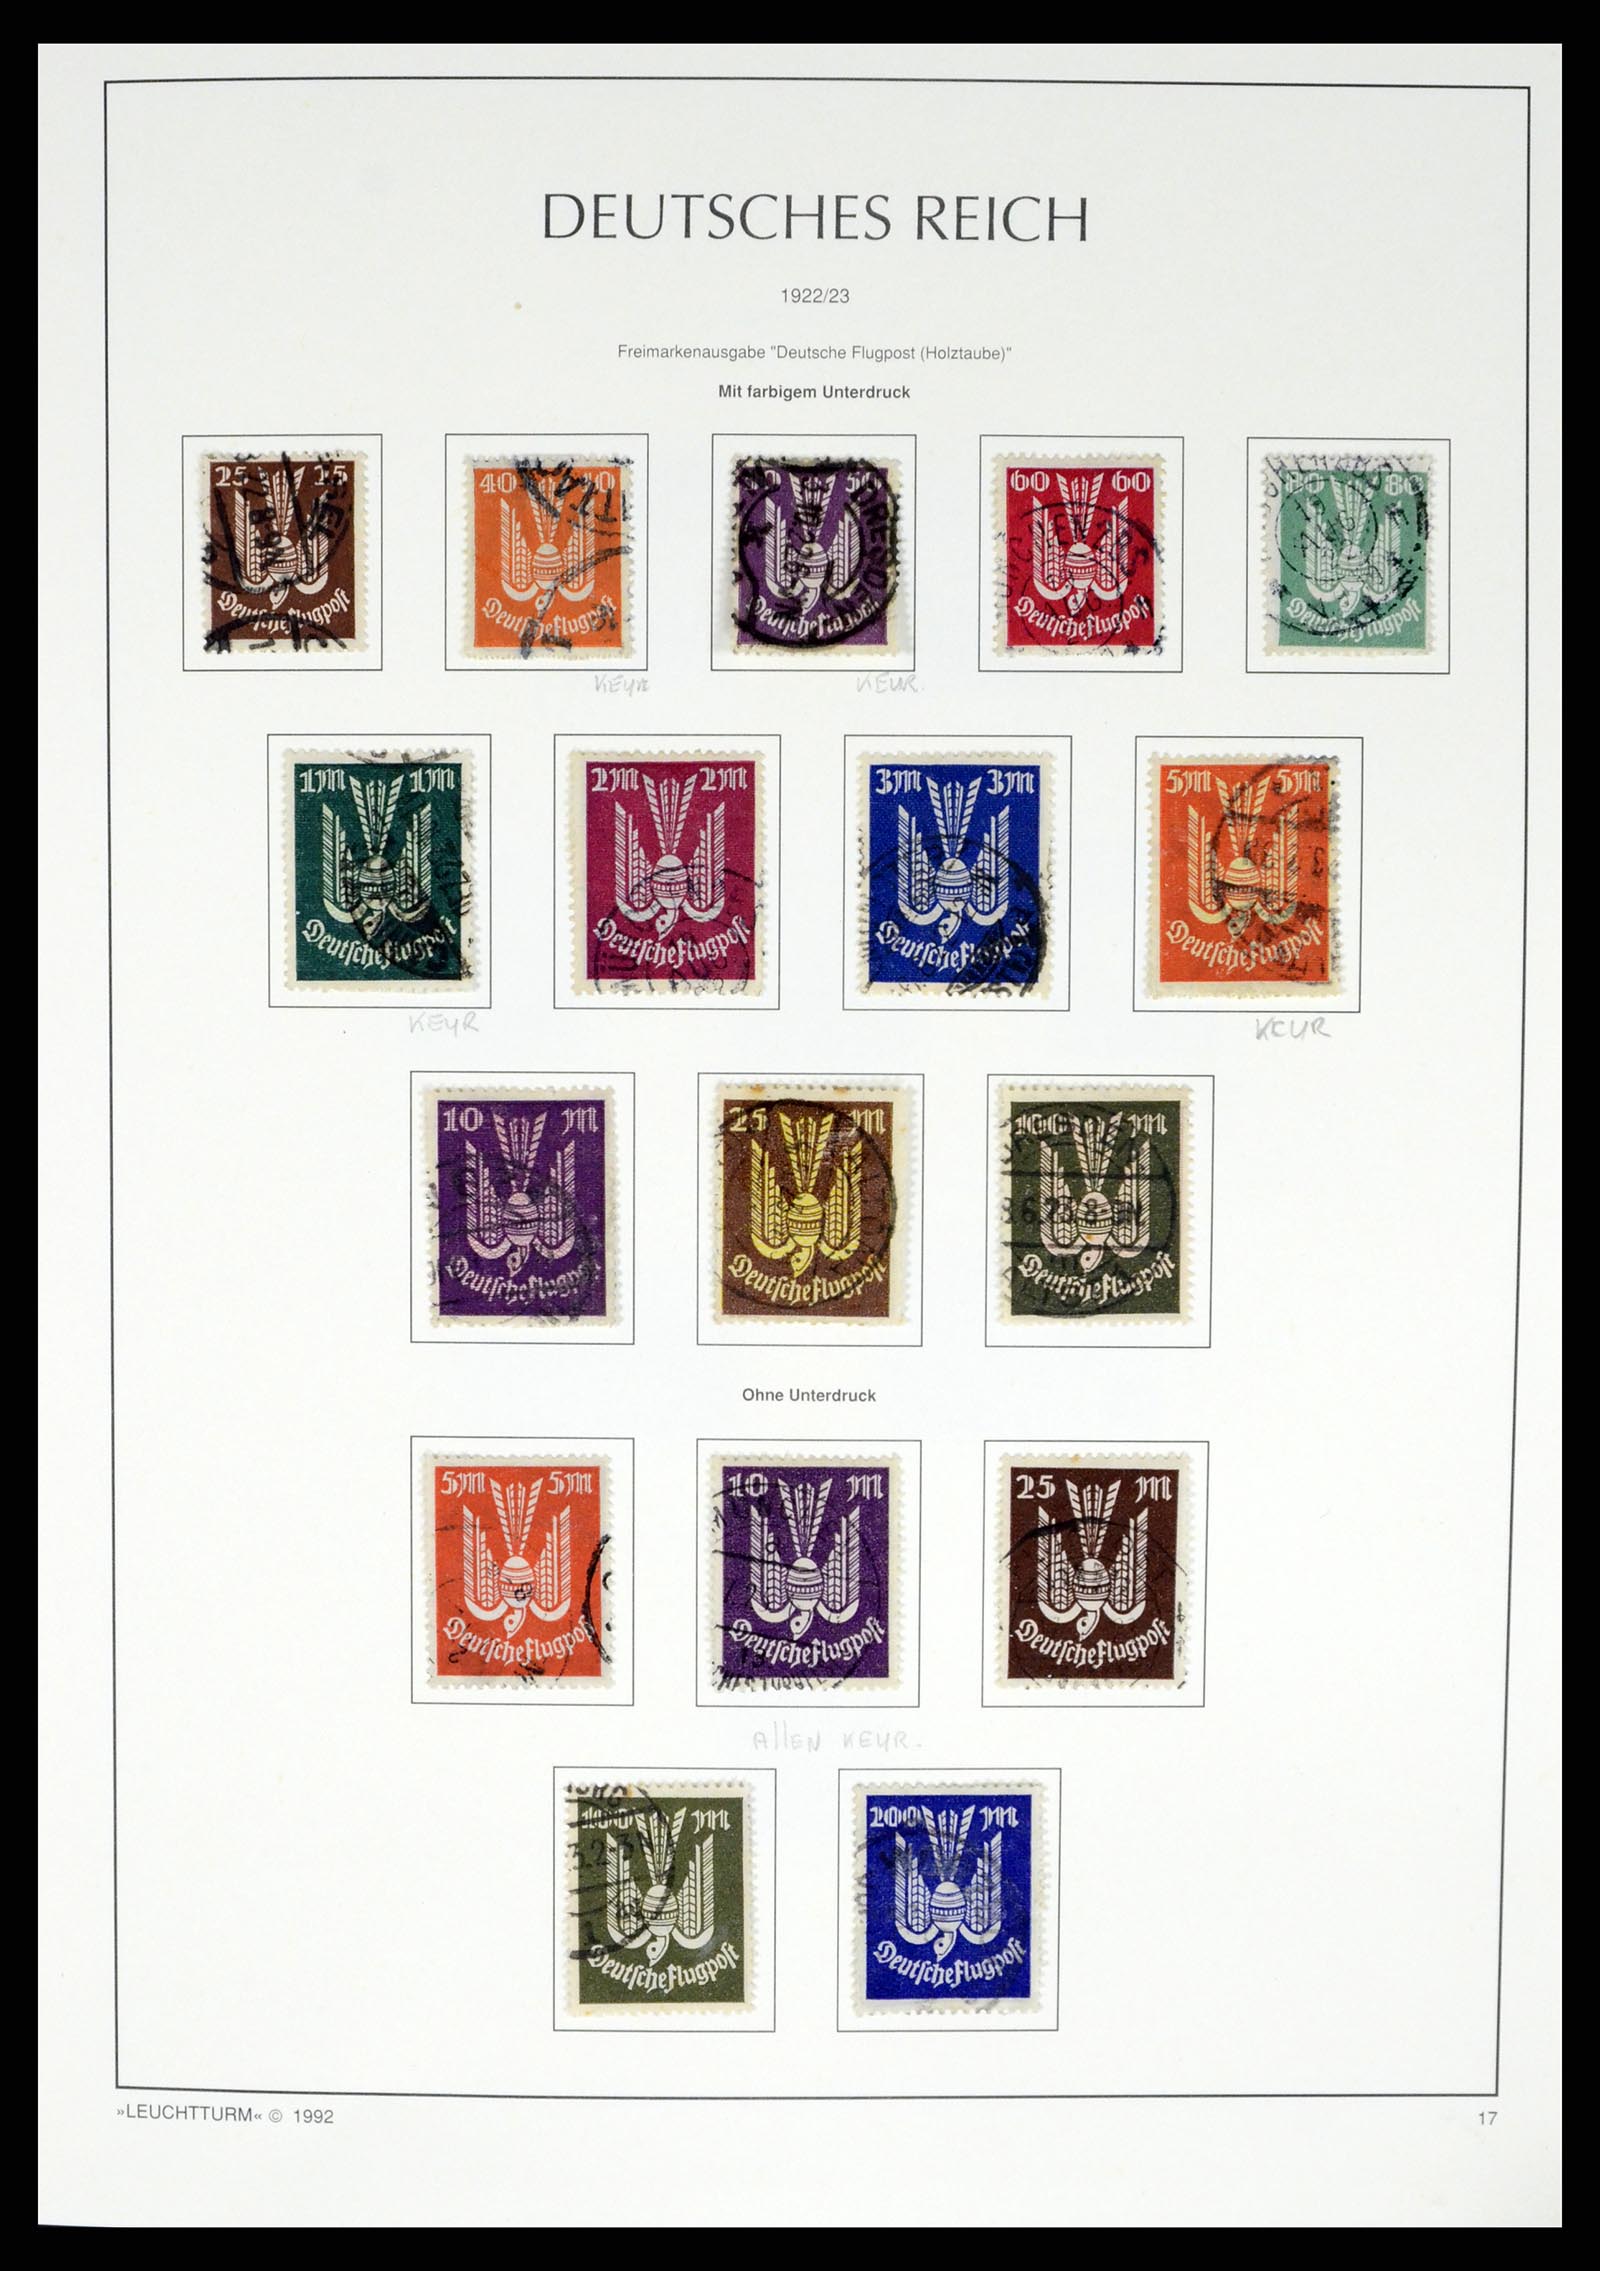 37497 032 - Stamp collection 37497 German Reich 1872-1945.